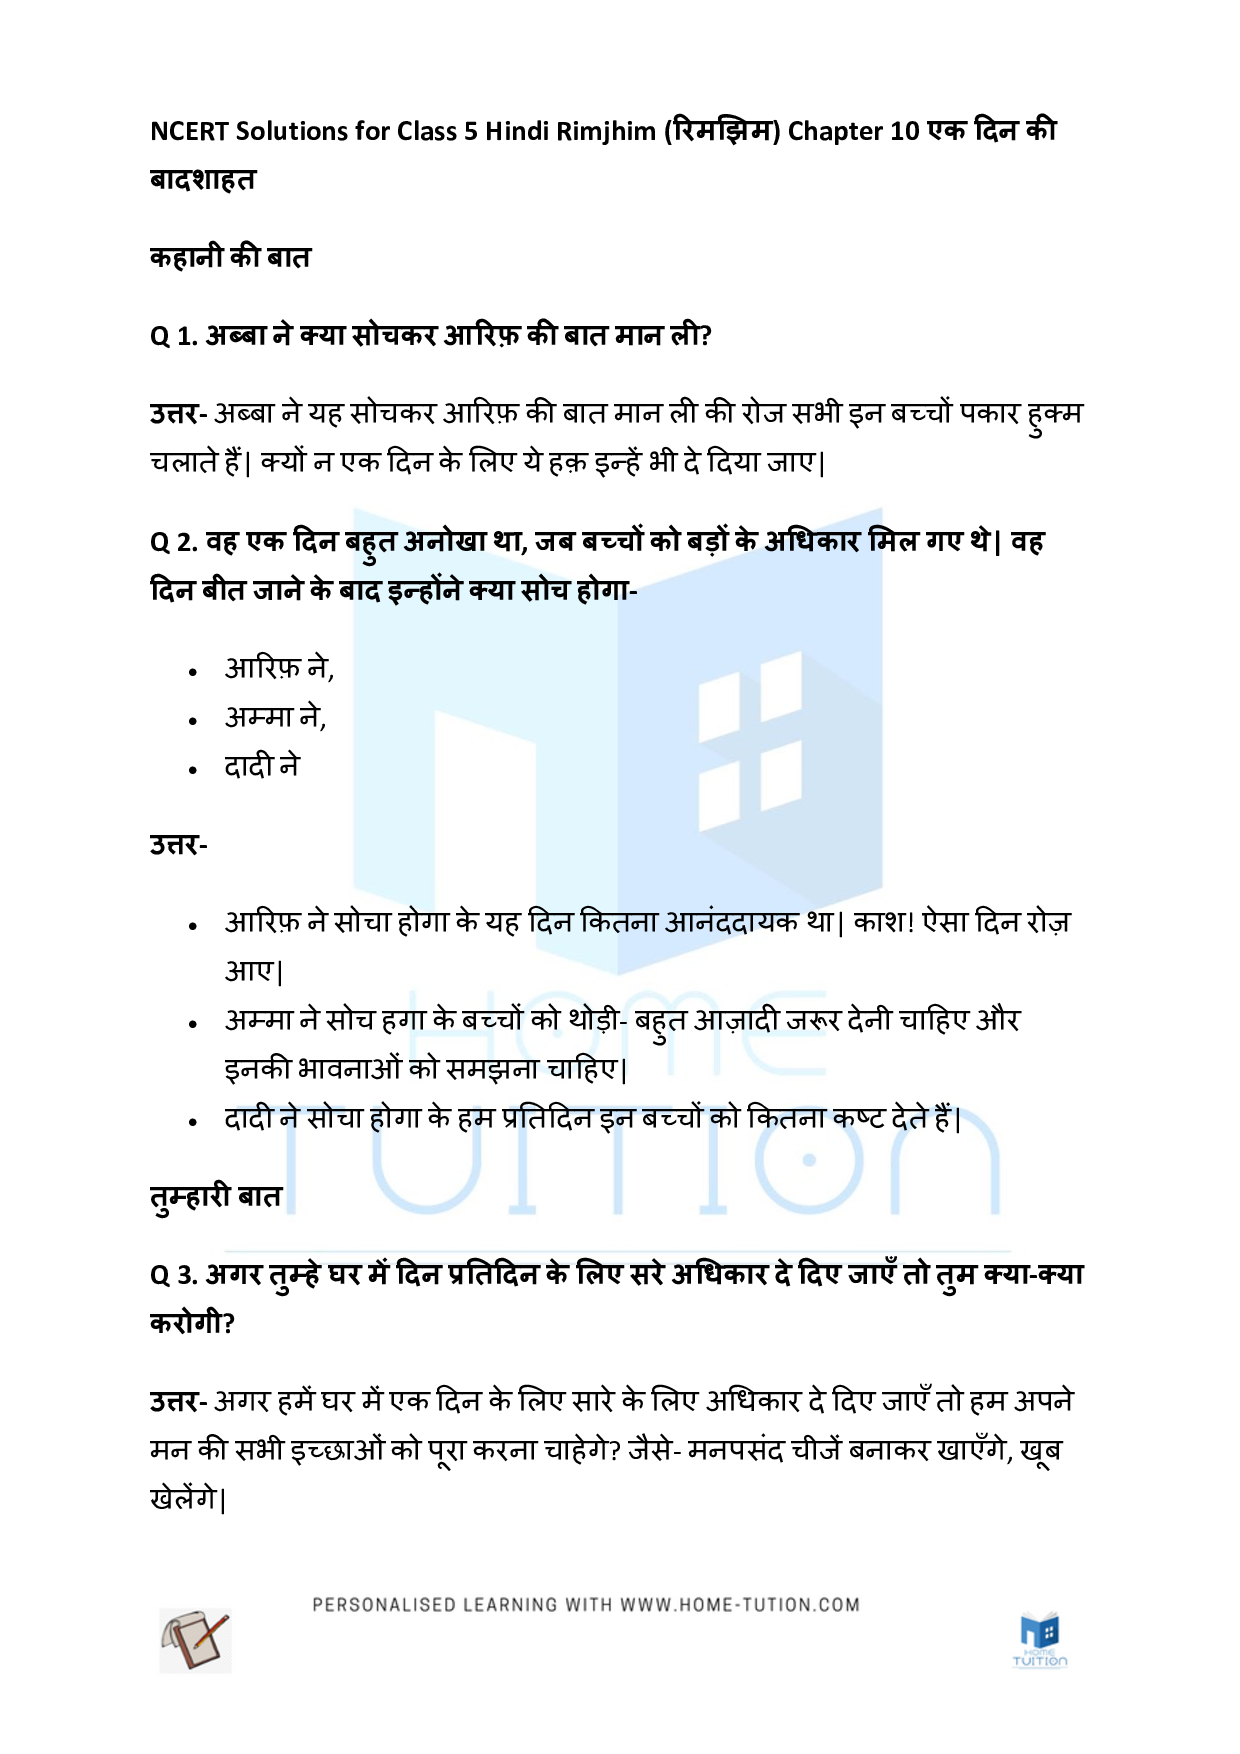 NCERT Solutions for Class 5 Hindi Rimjhim Chapter 10 एक दिन की बादशाहत